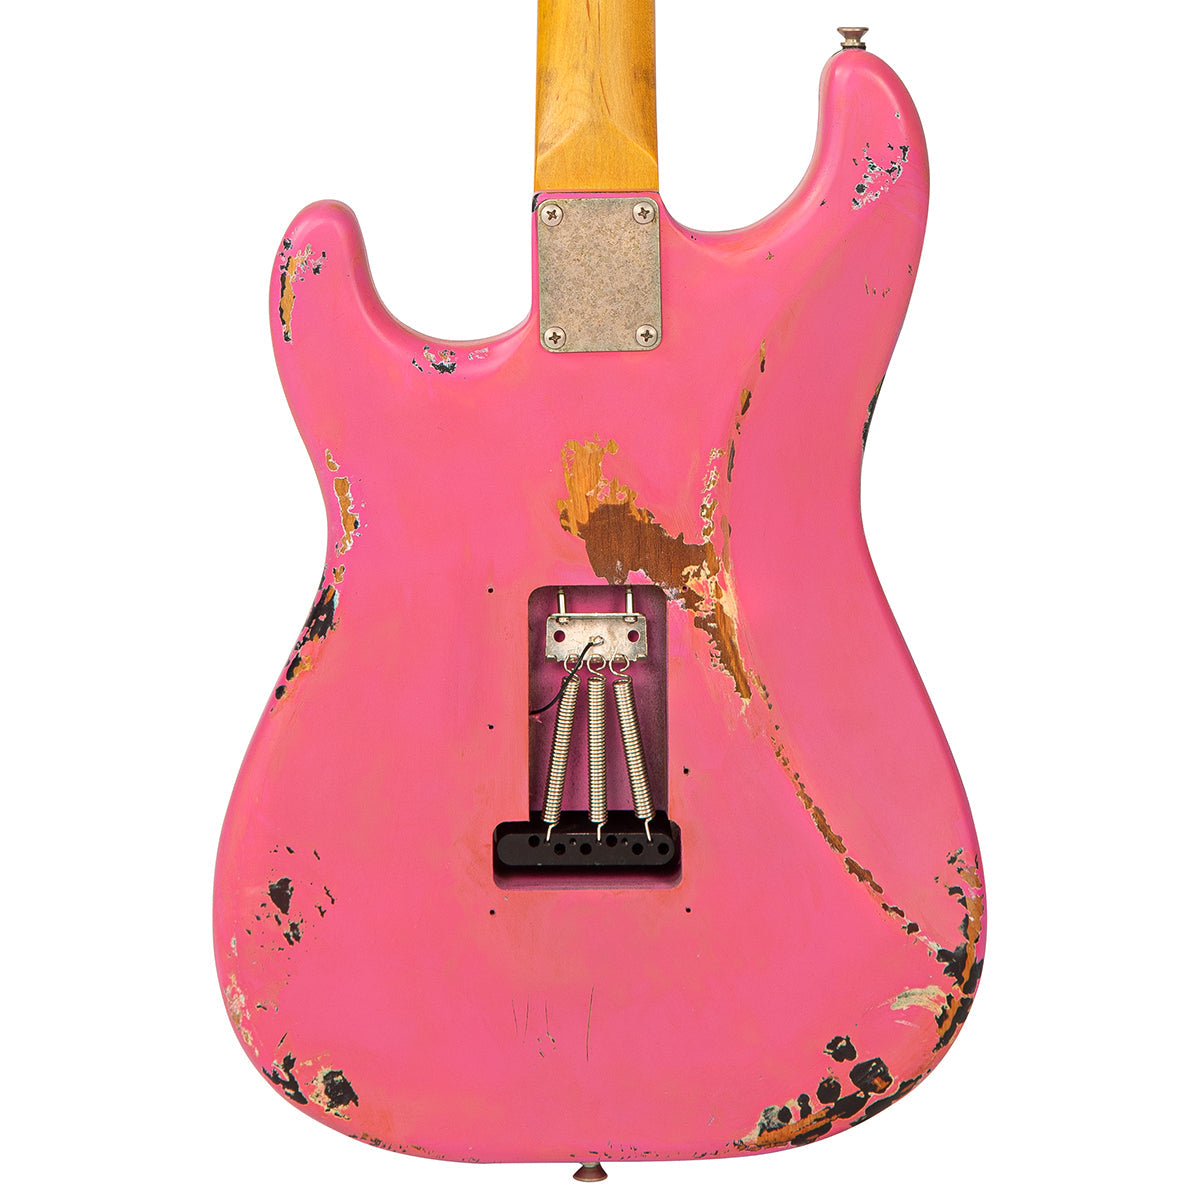 SOLD - Vintage V6 ProShop Custom-Build ~ Radioactive Bubblegum Pink (Contact: Richards Guitars. www.rguitars.co.uk), Electrics for sale at Richards Guitars.